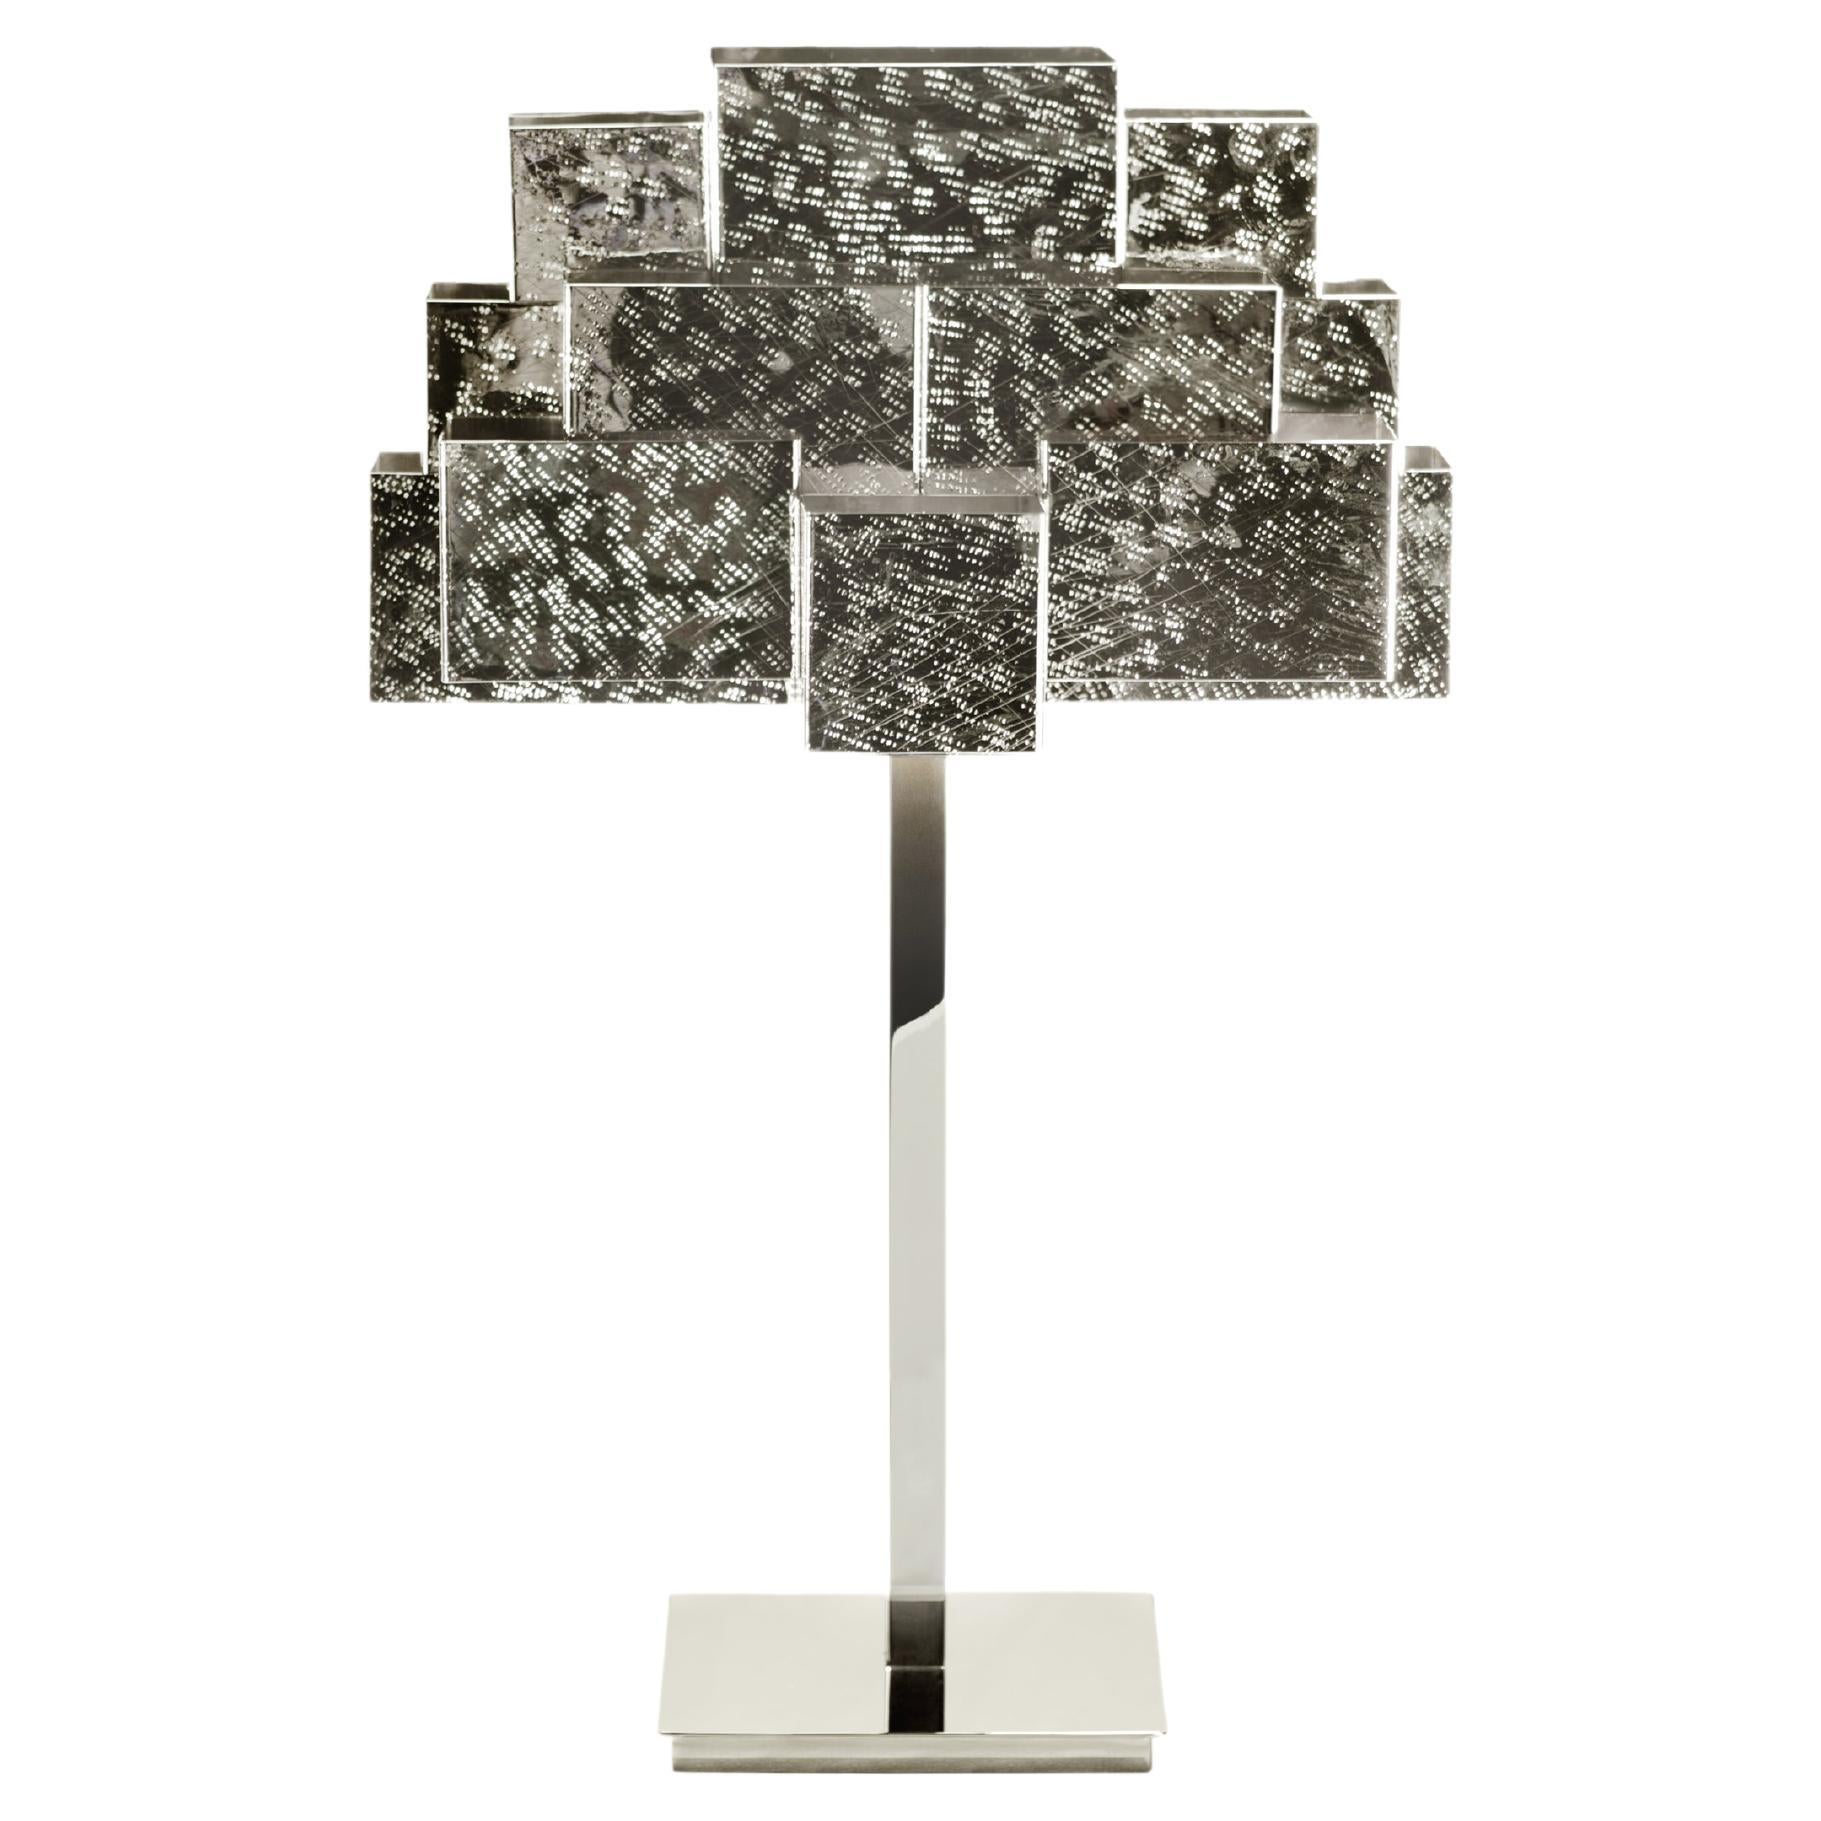 Inspiring Trees Table Lamp, Pricked Nickel, InsidherLand by Joana Santos Barbosa